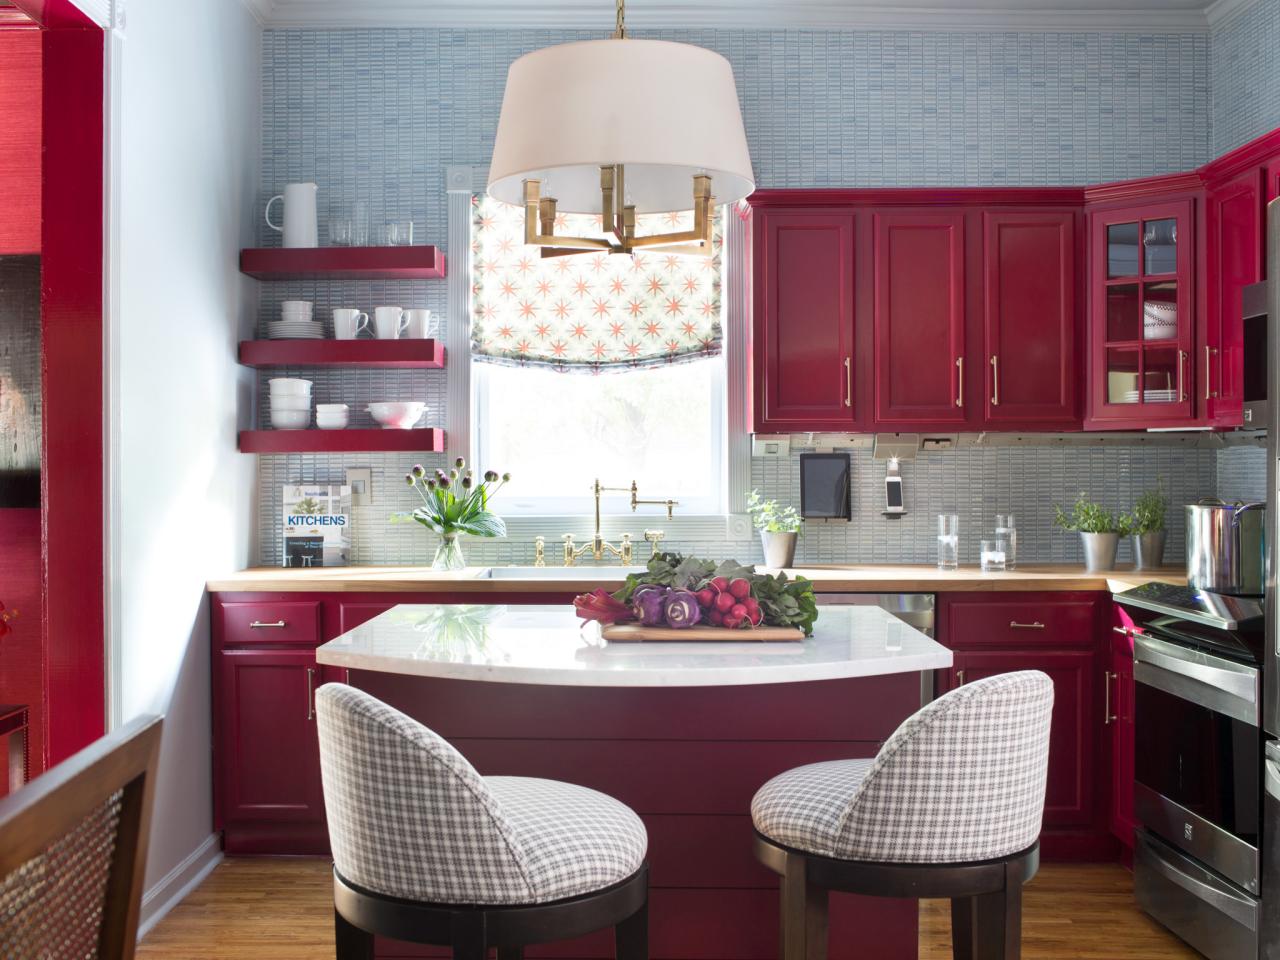 10 Low-Cost Kitchen Upgrades | HGTV's Decorating & Design Blog | HGTV